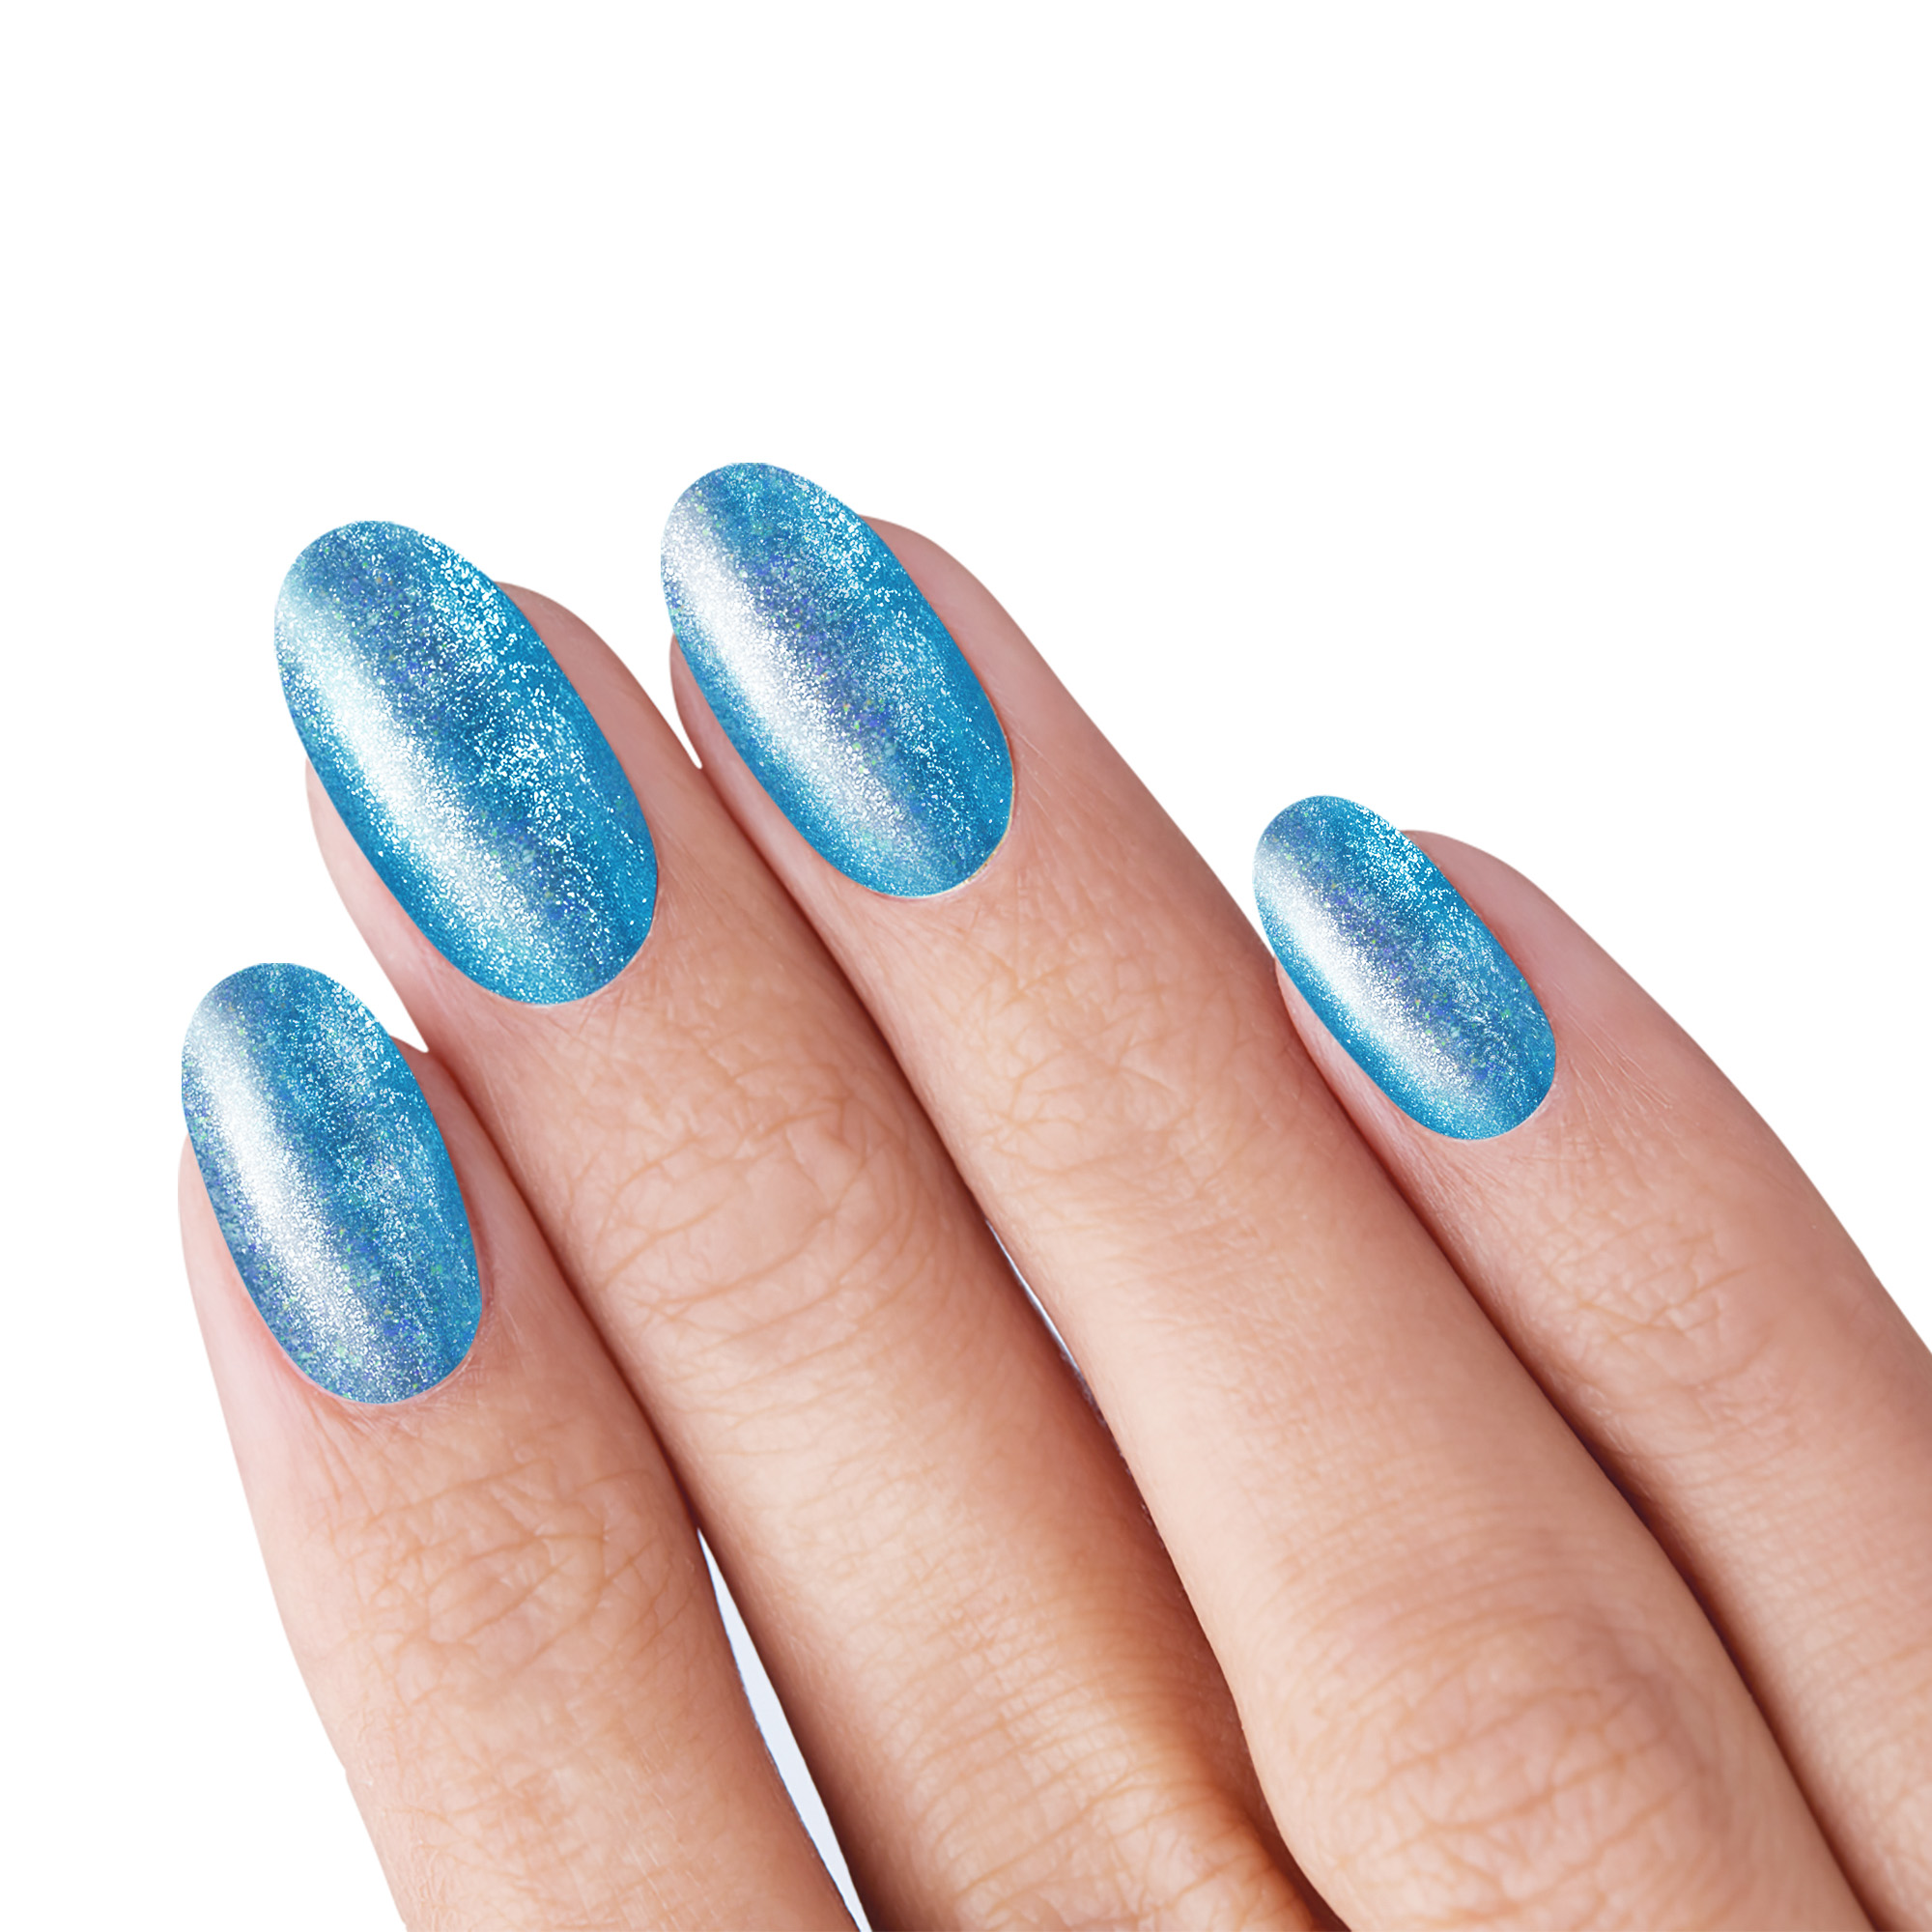 Nail polish Sirena metallic blue 10 ml TNS